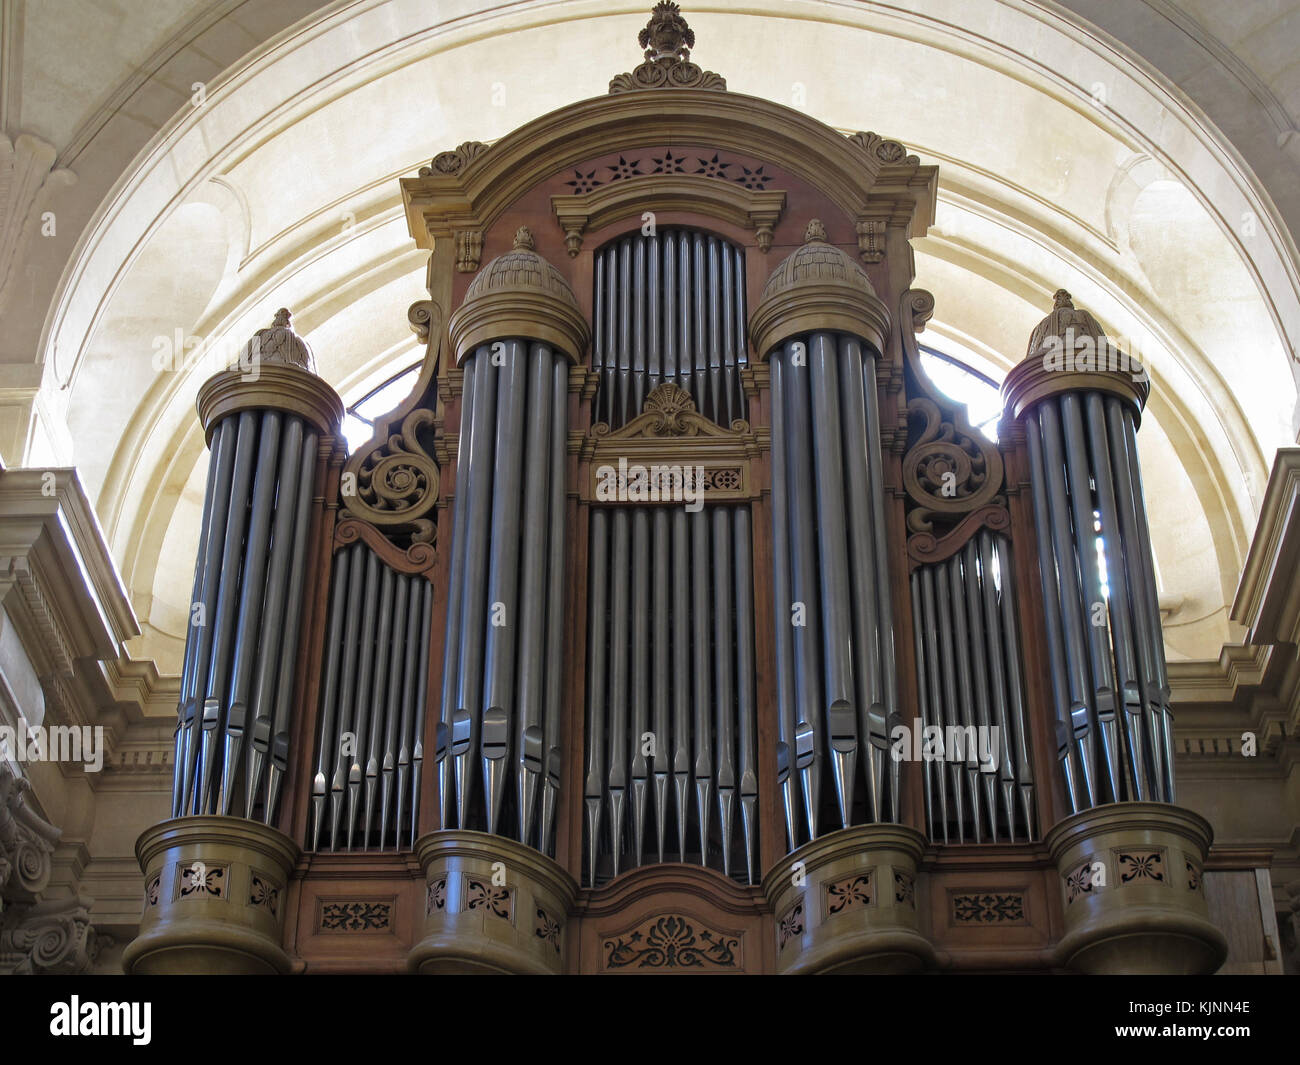 Great organ built by Aristide Cavaille-Coll in 1846, Temple de Pentemont, Protestan church, rue de Grenelle, Paris, France, Europe Stock Photo